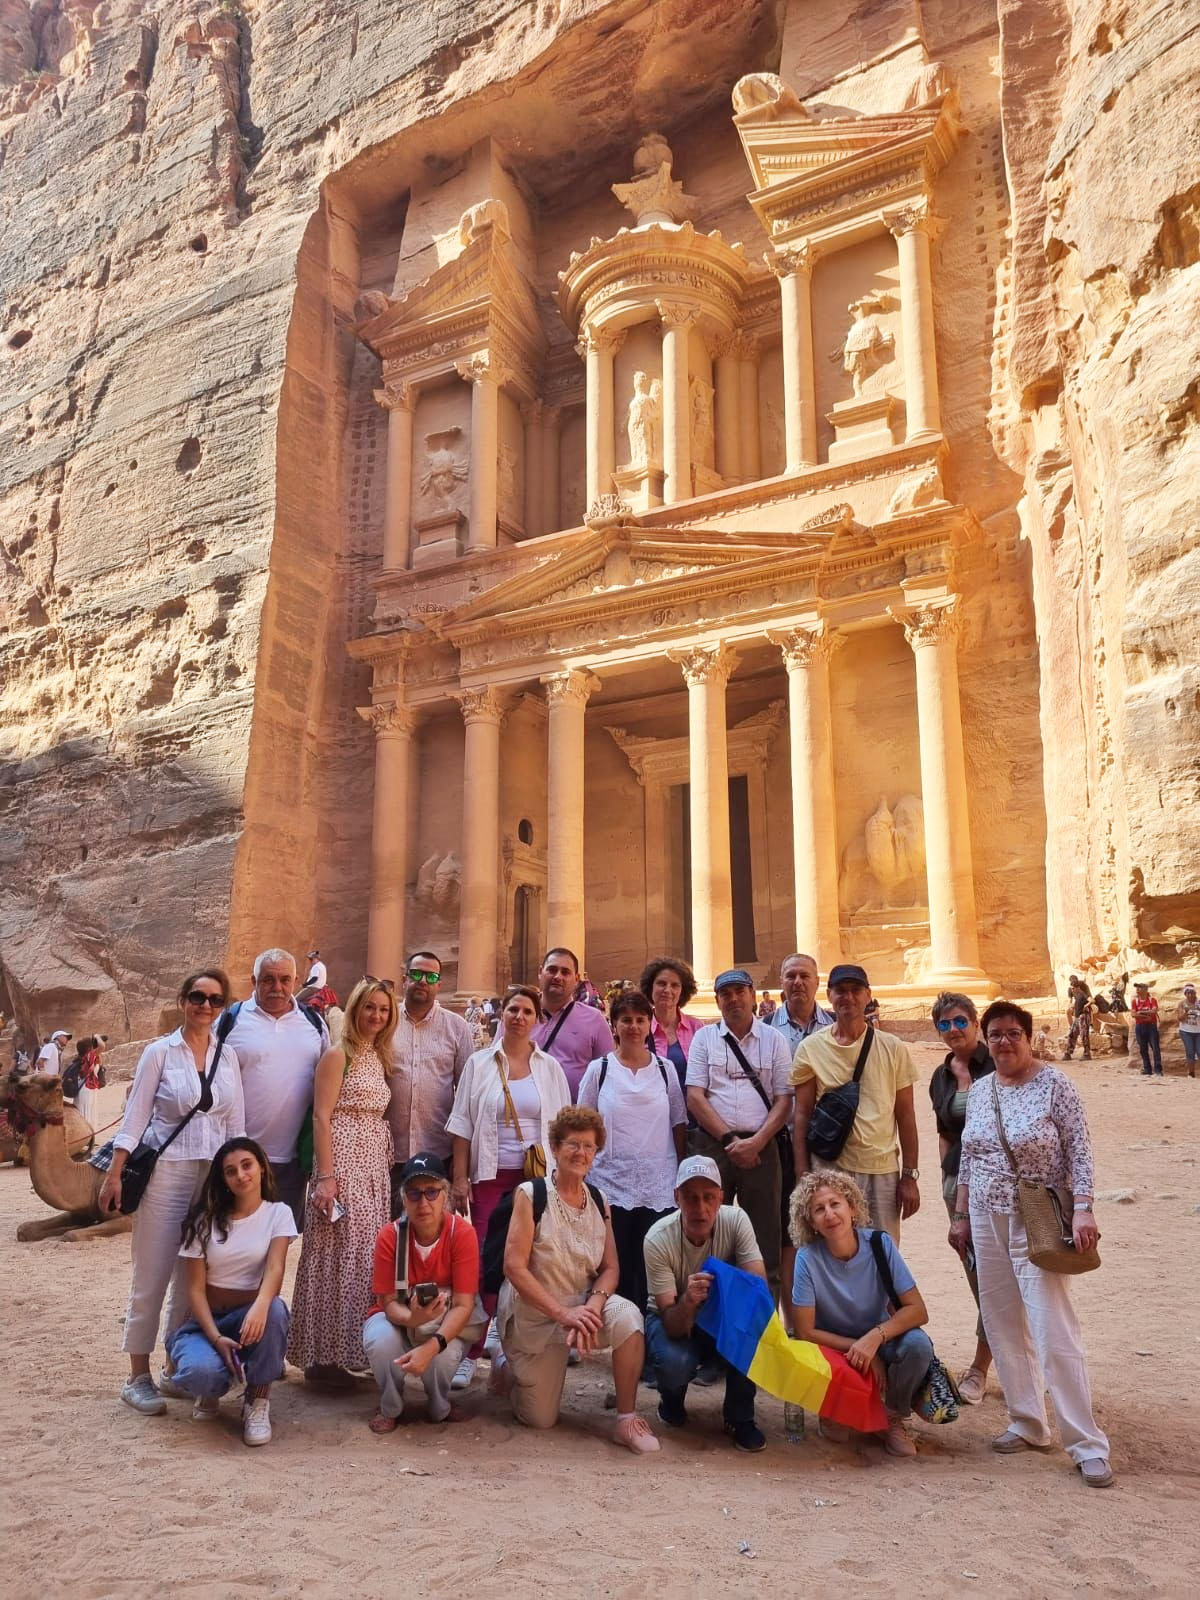 In Iordania la Petra